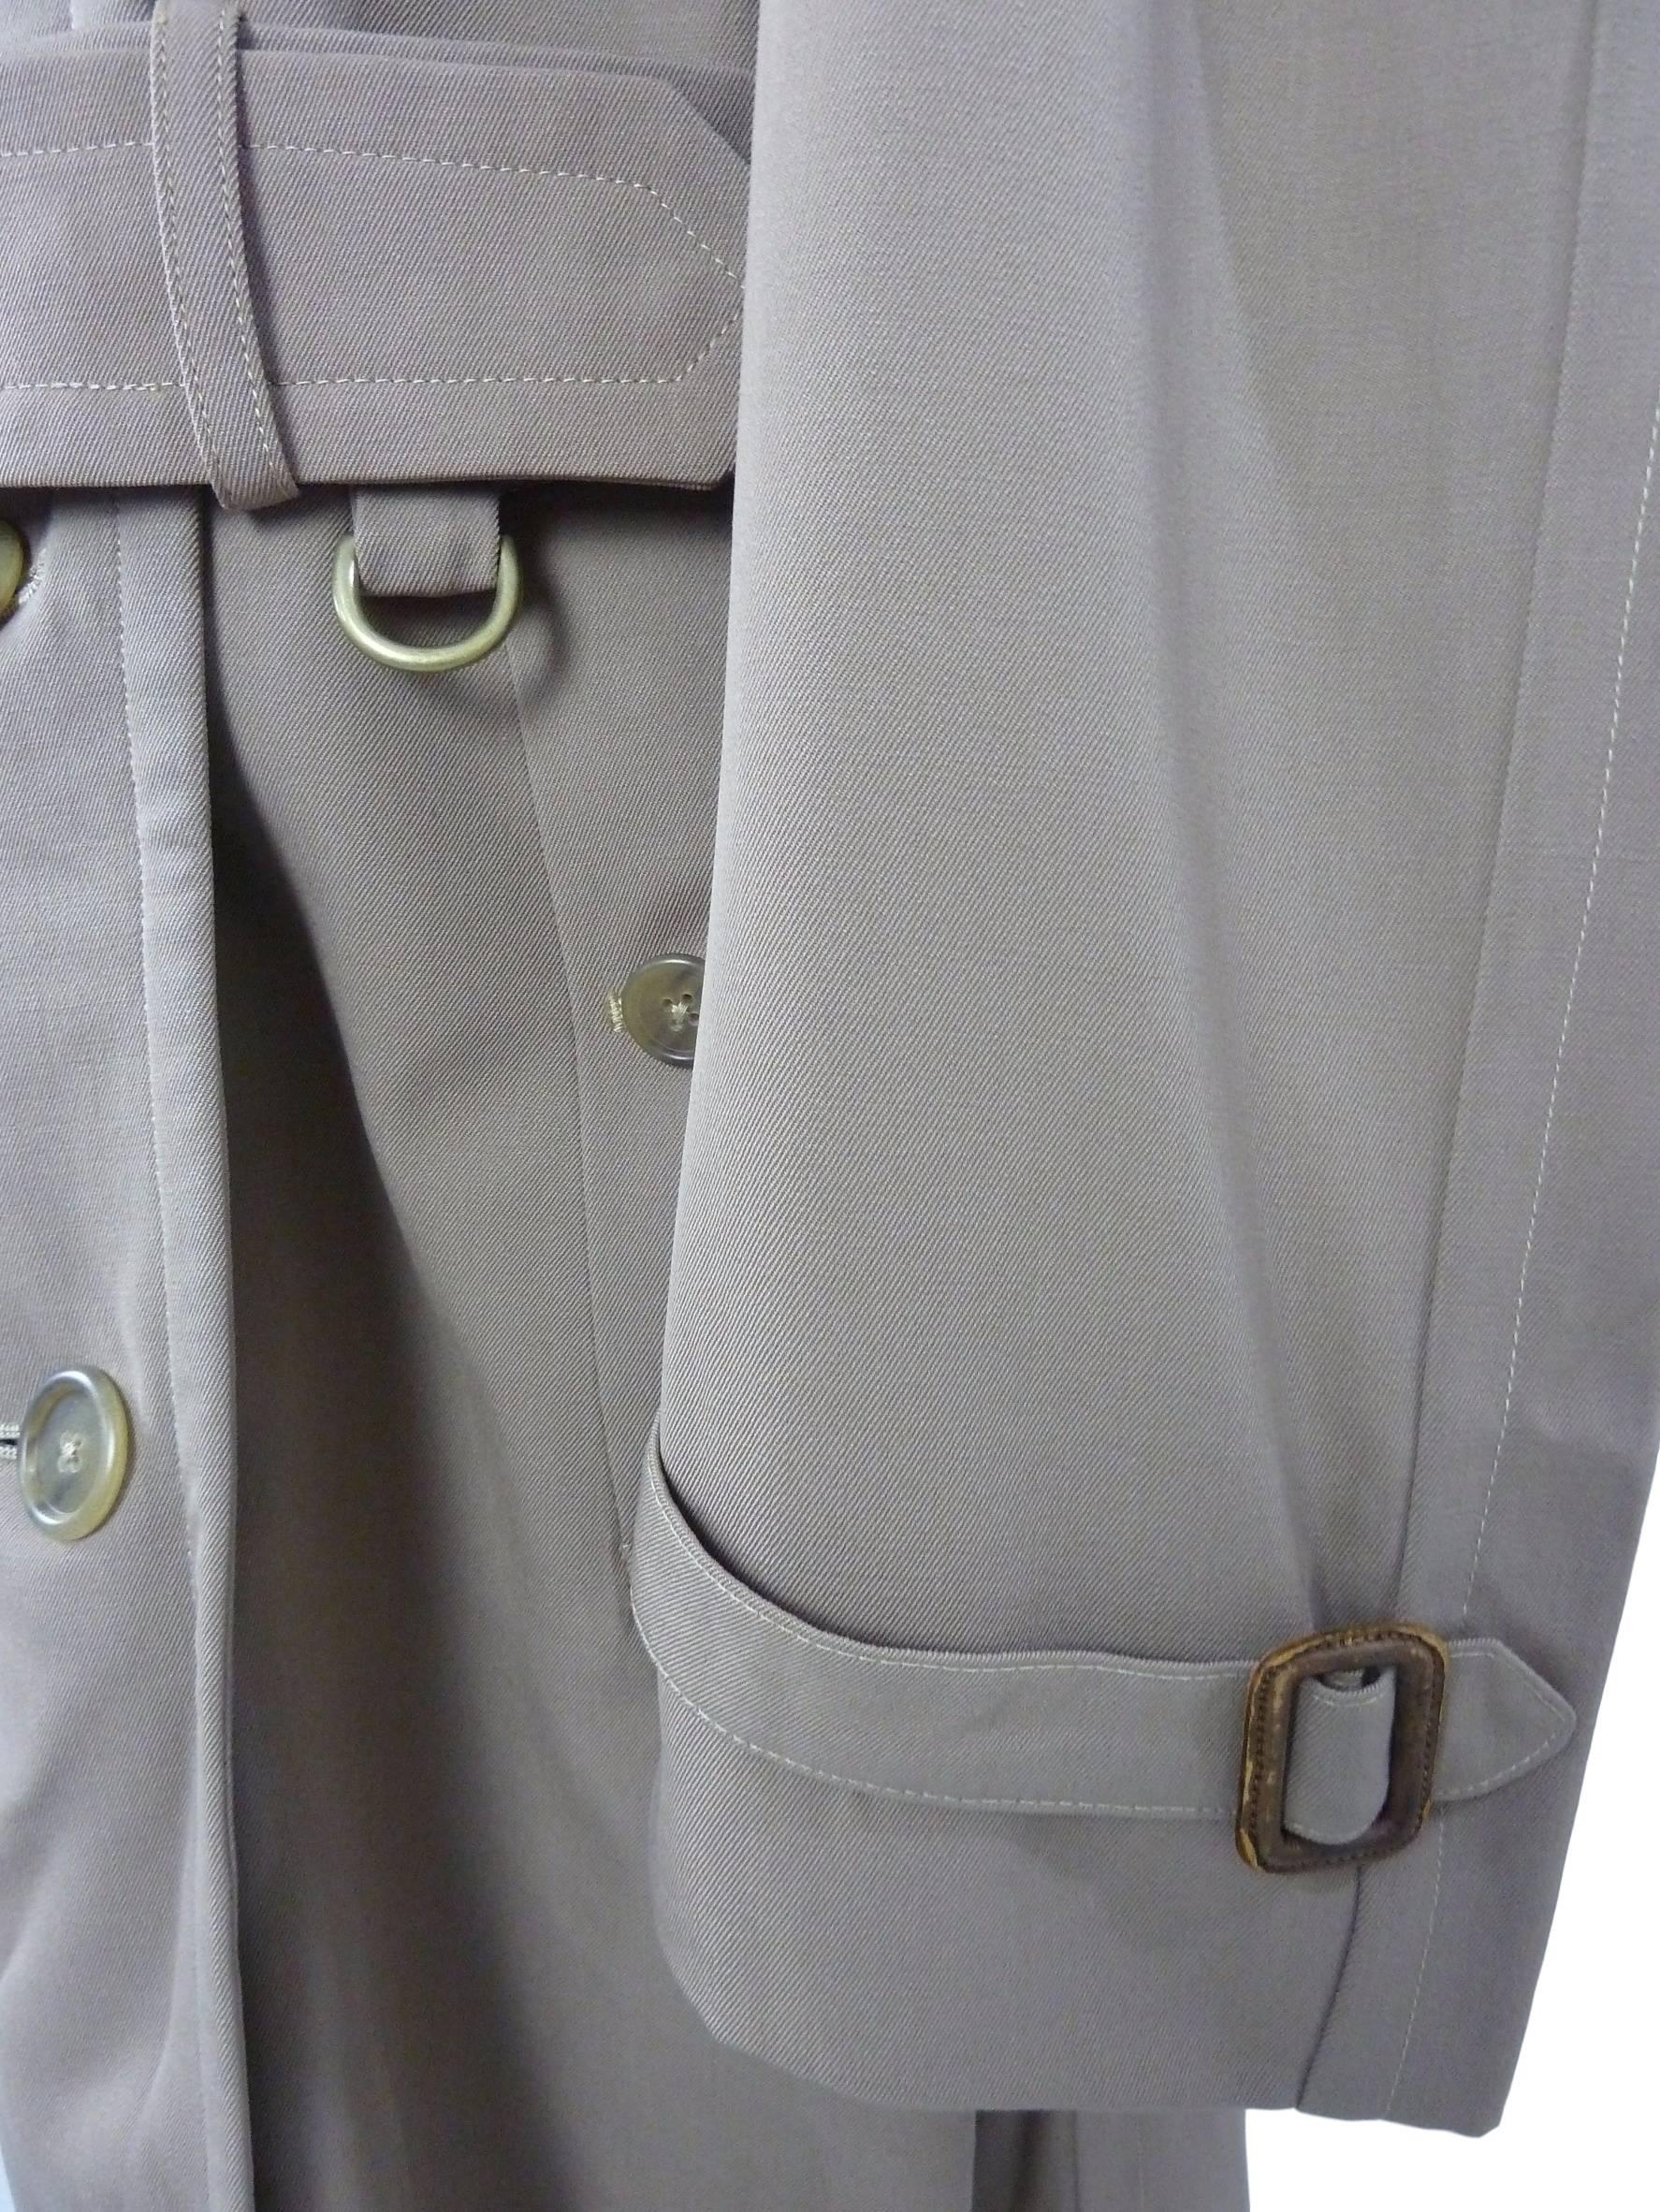 Beige Burberry 1980s trench coat men's beige size 38 reg raincoat long vintage